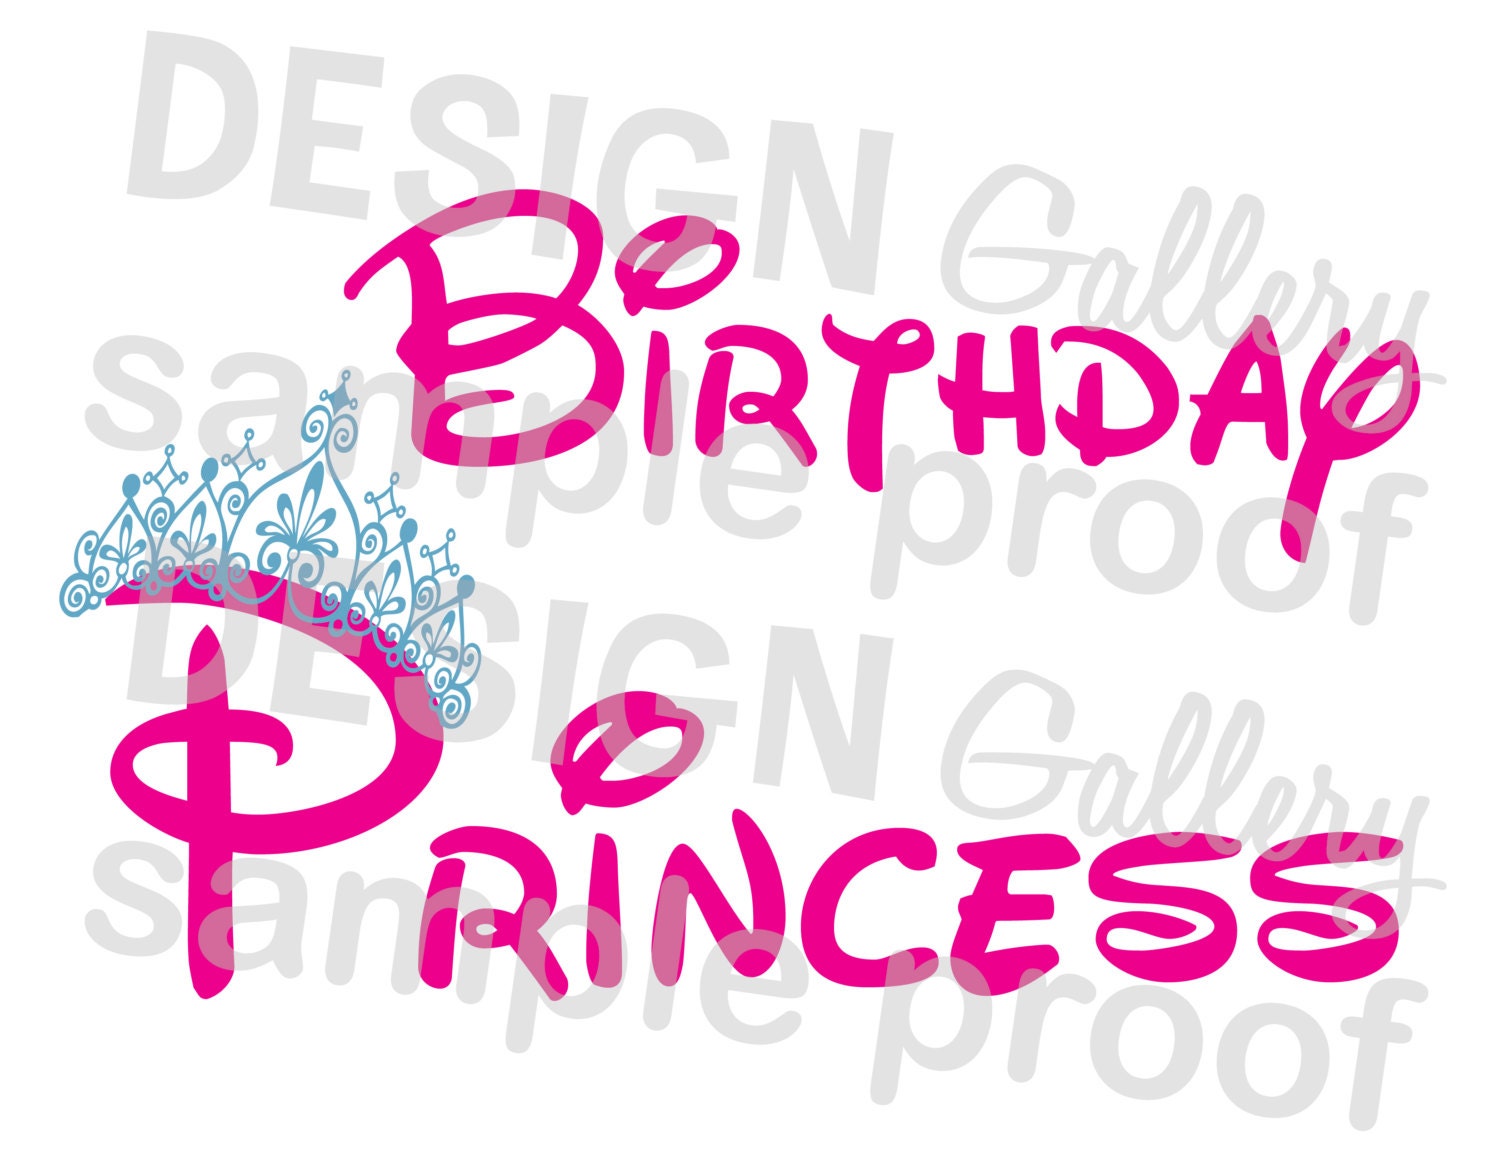 Birthday Princess with Crown image JPG image & SVG cut DIY